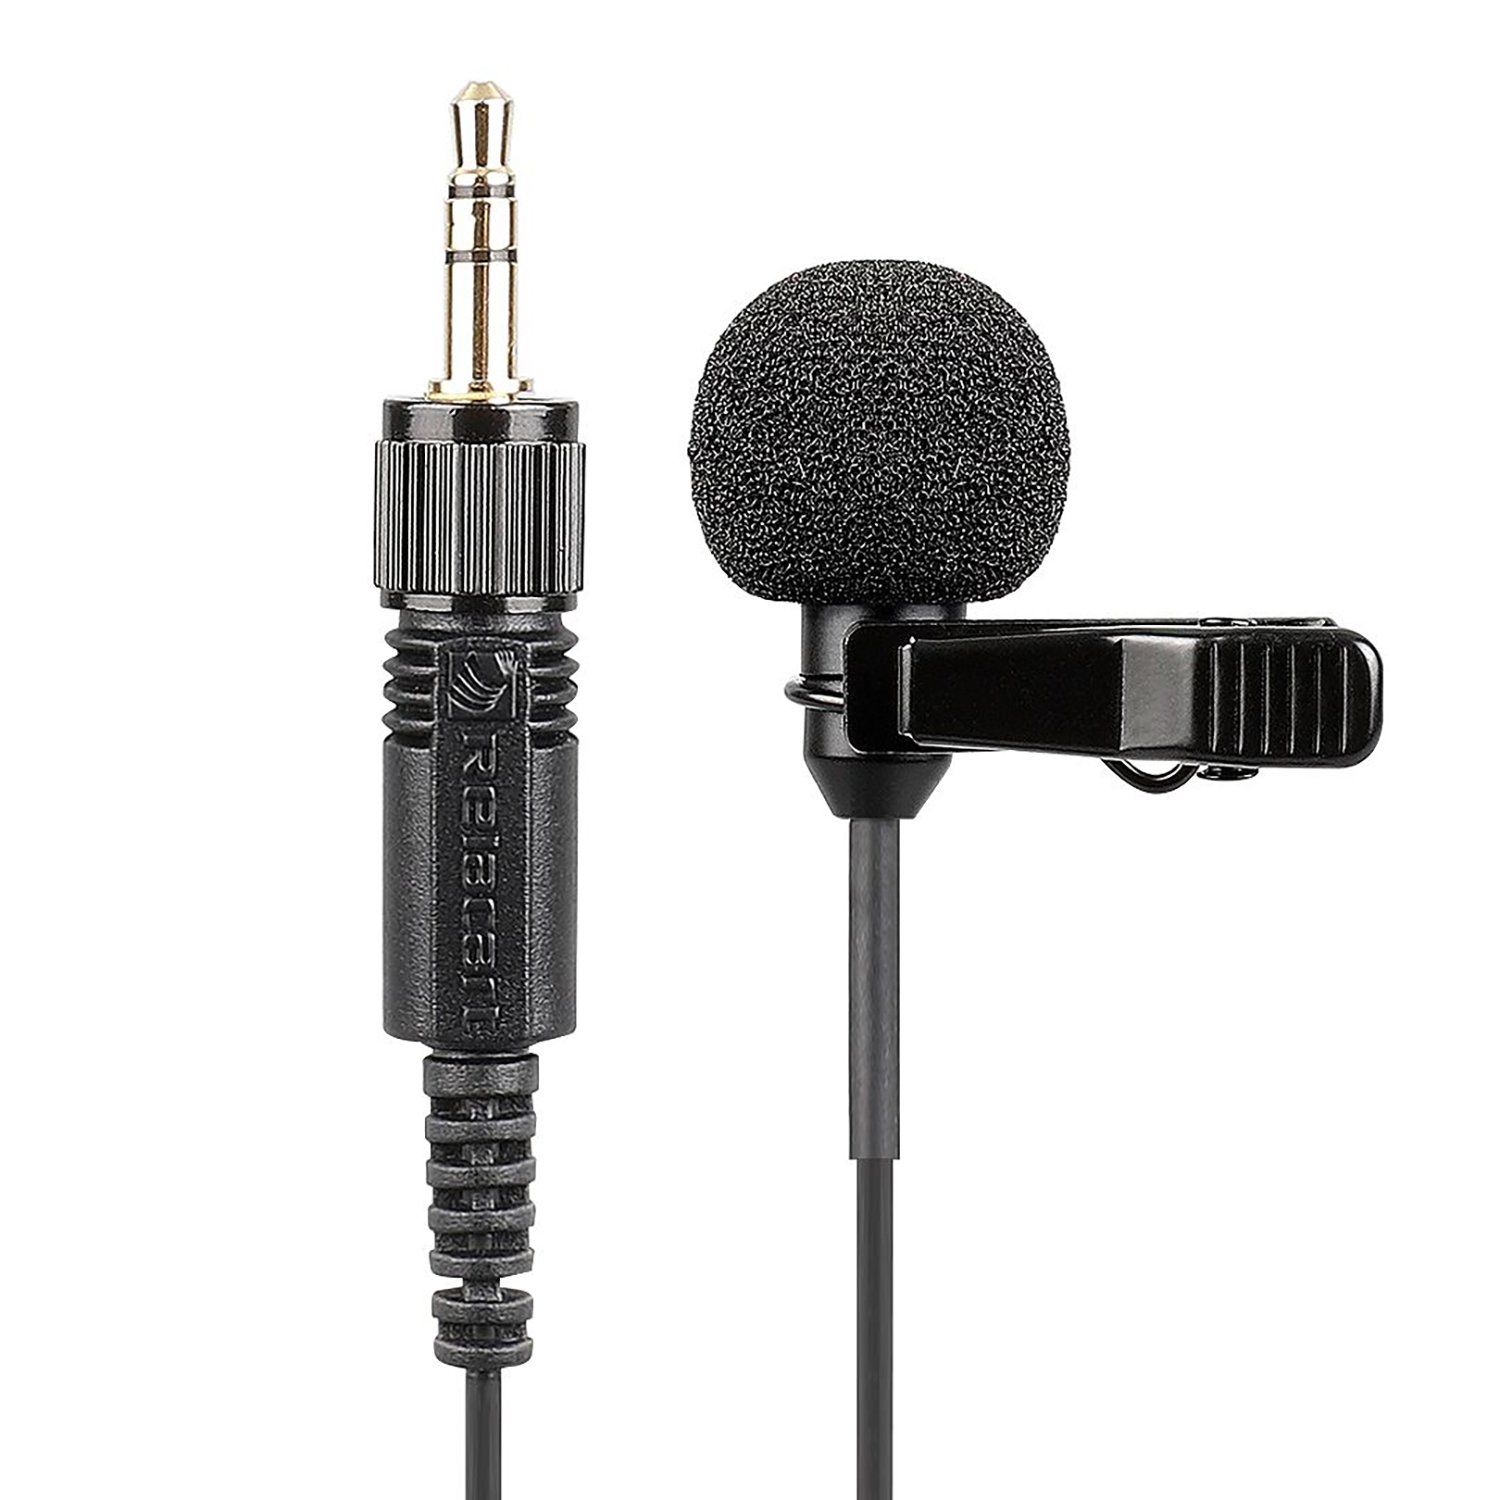 Relacart Lavalier Microphone 1.2m Default Relacart Default 